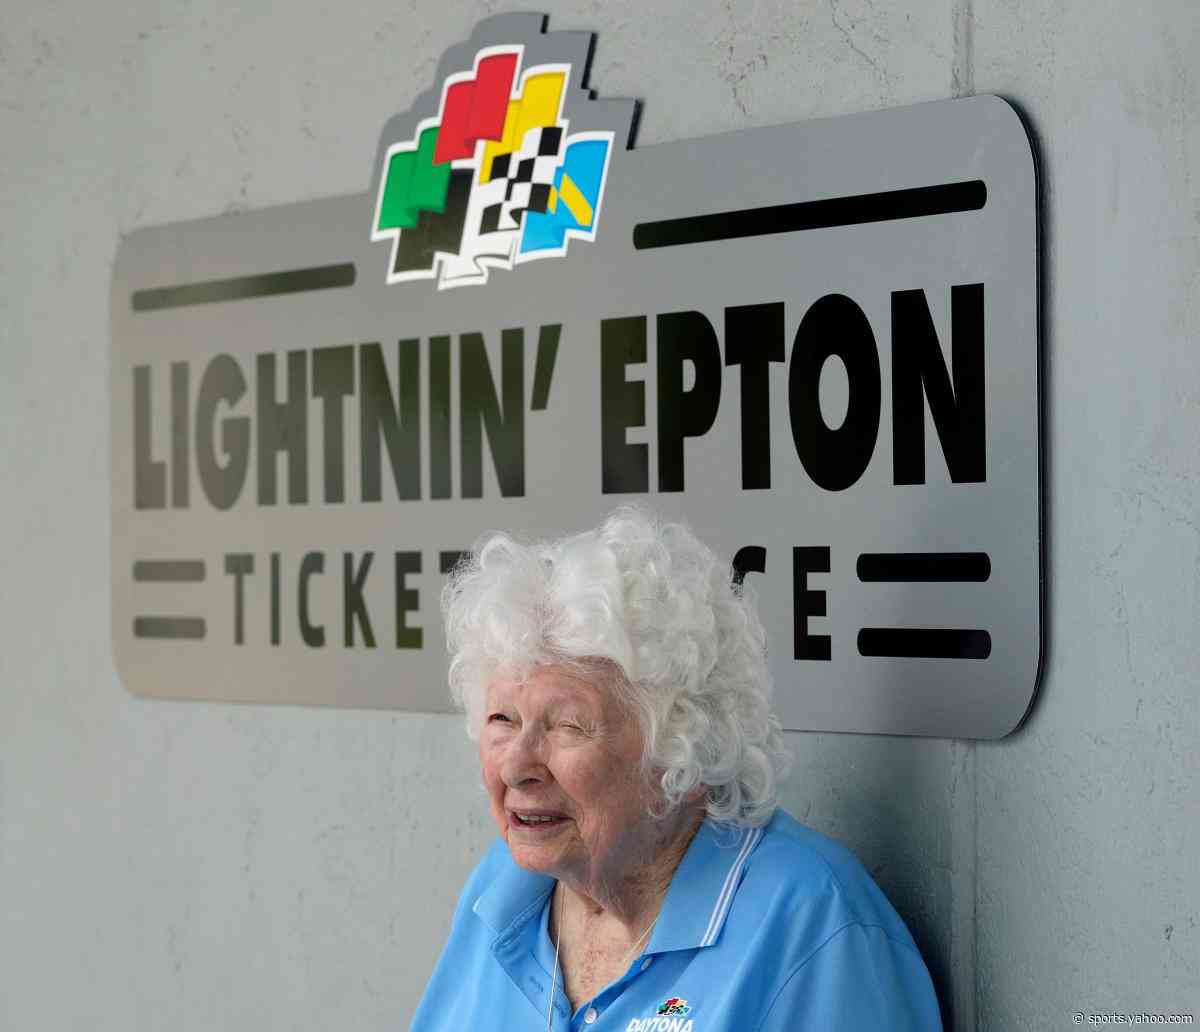 Juanita 'Lightnin' Epton, NASCAR and Daytona fixture for over six decades, dies at 103